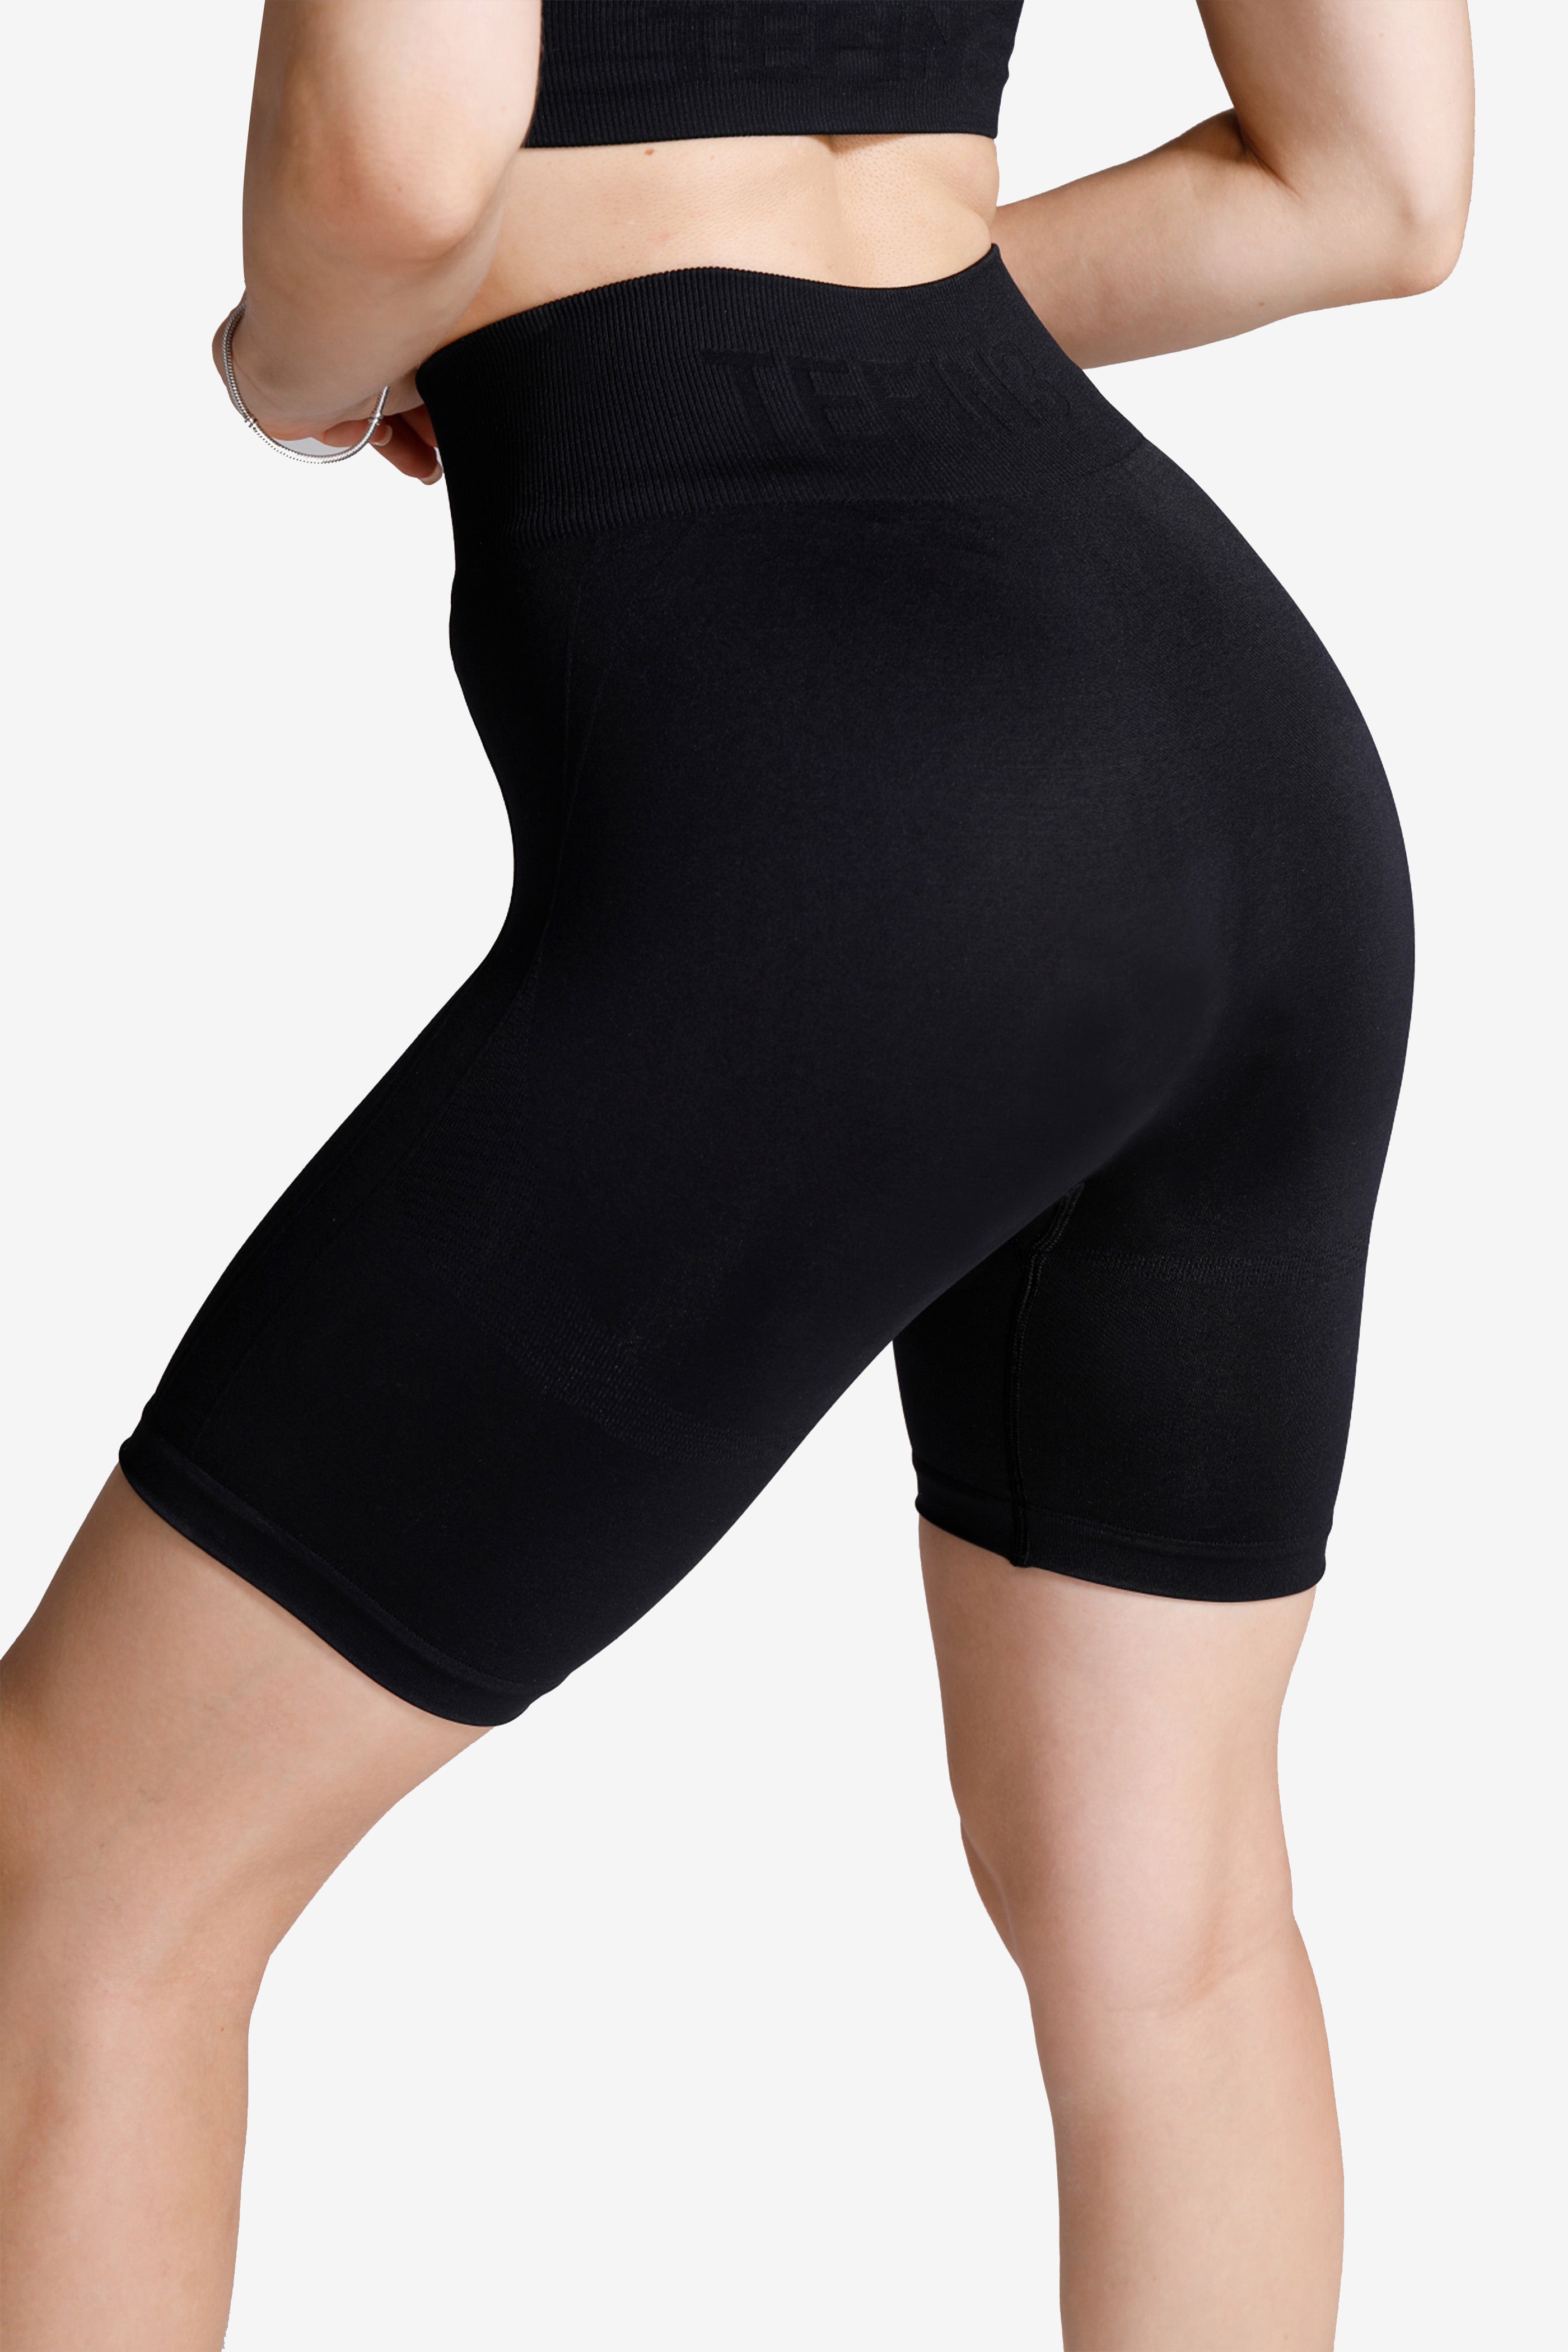 TEFIN3 Comfy Seamless Women Workout Shorts Black